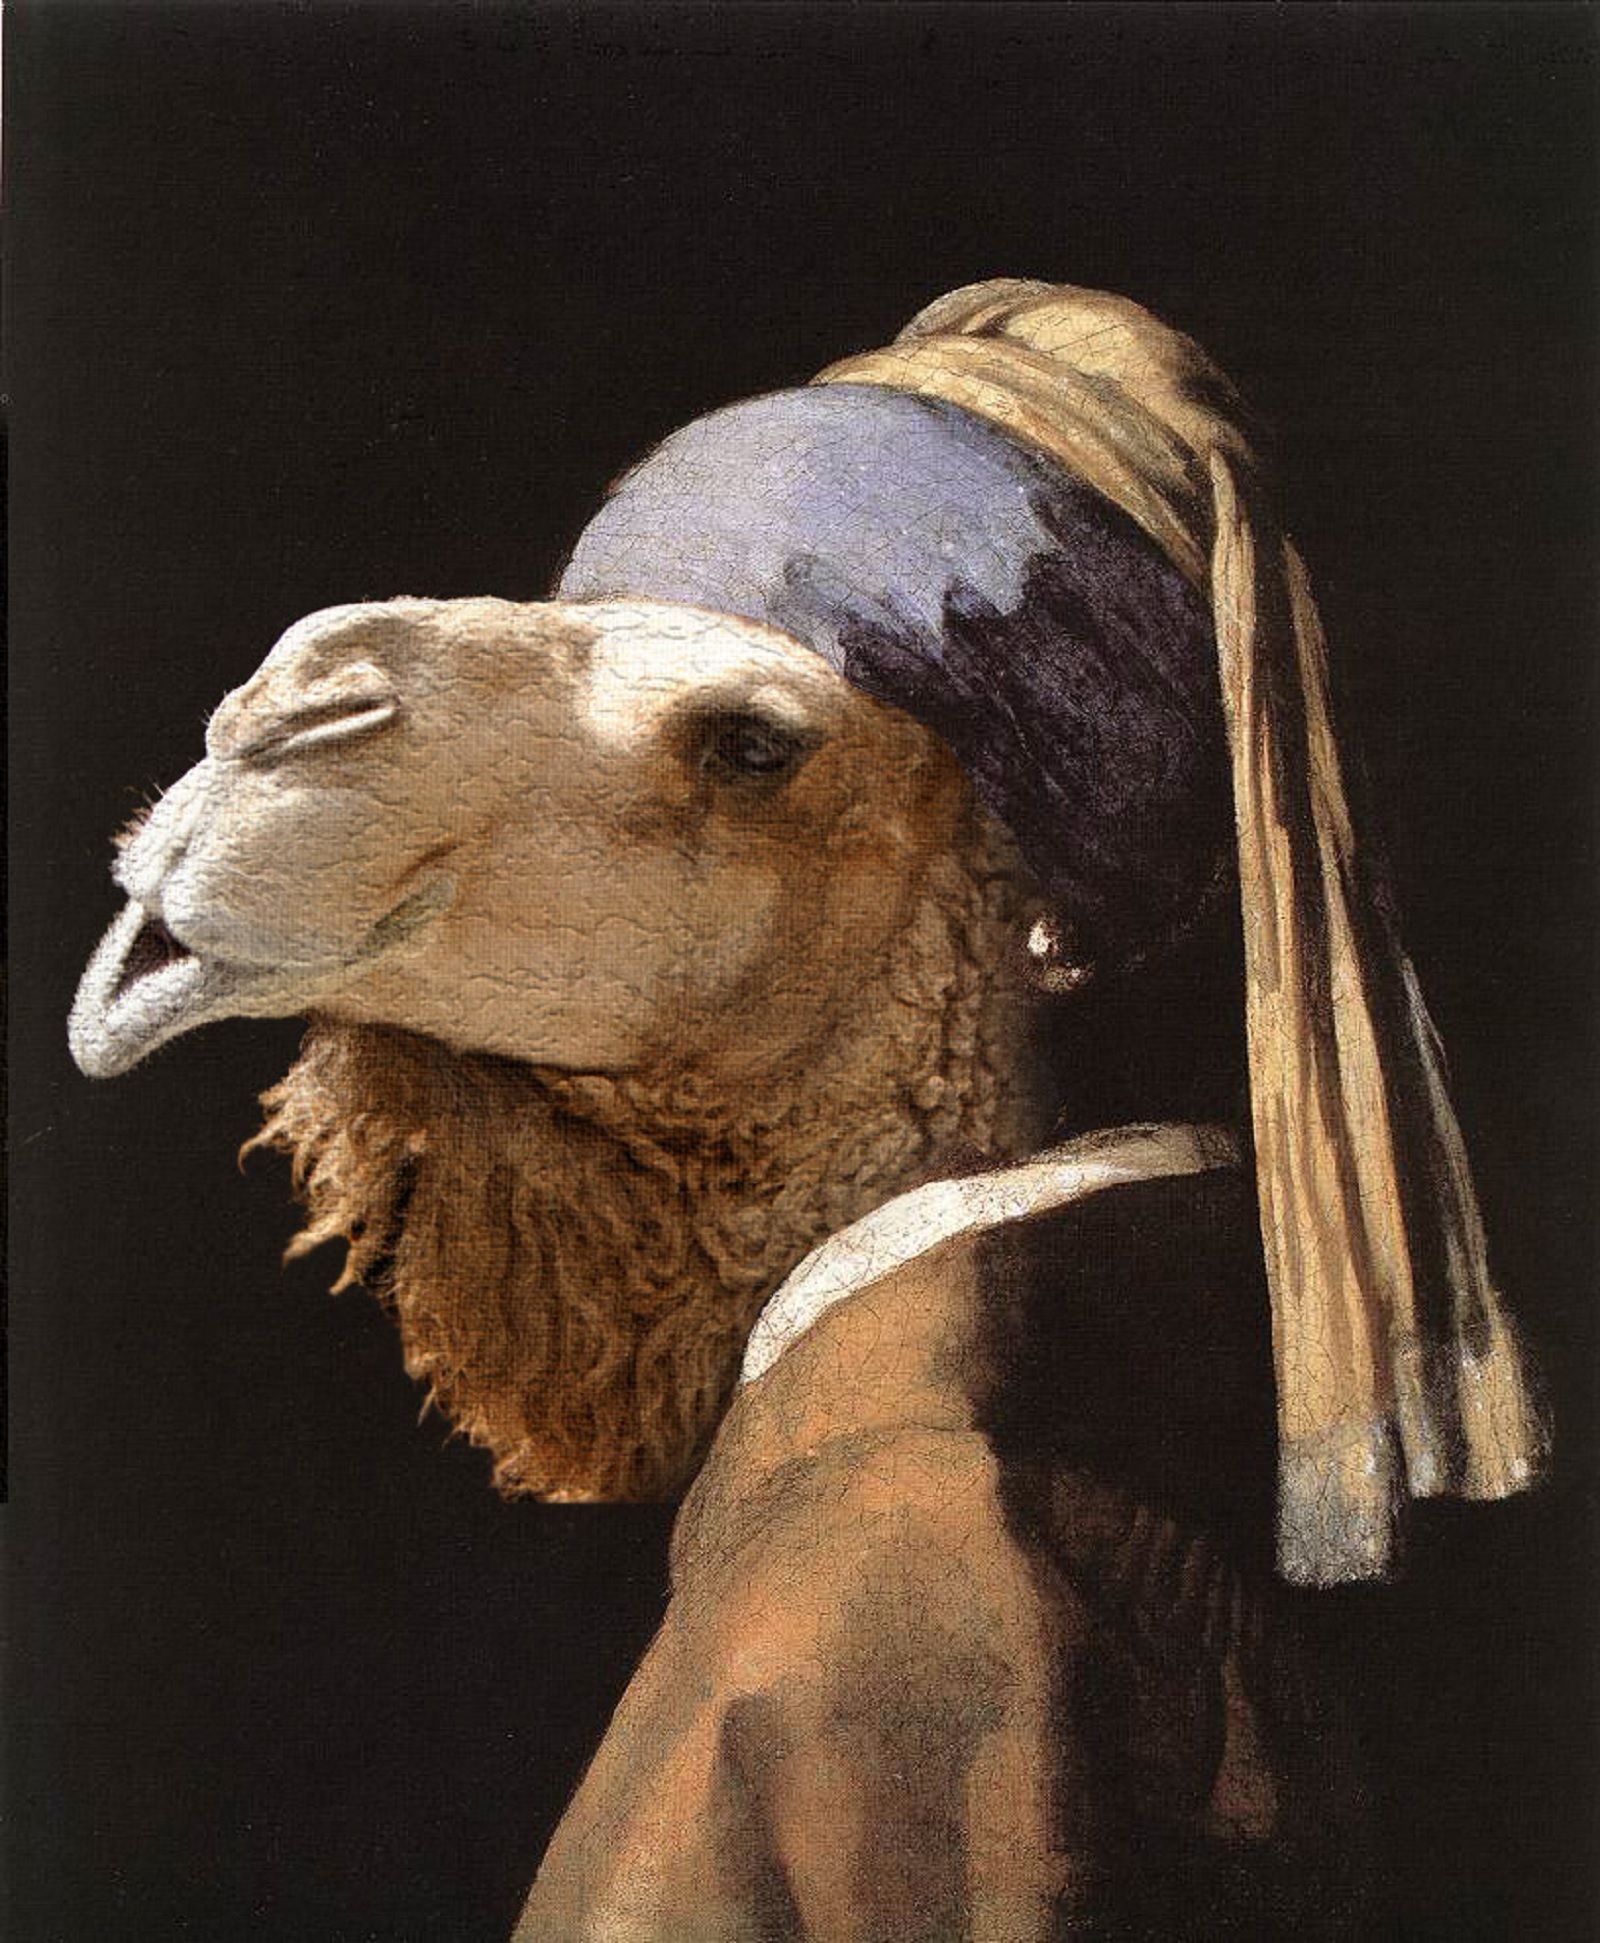 Amusing Images Of Animals Photoshopped Into Renaissance Paintings image 22